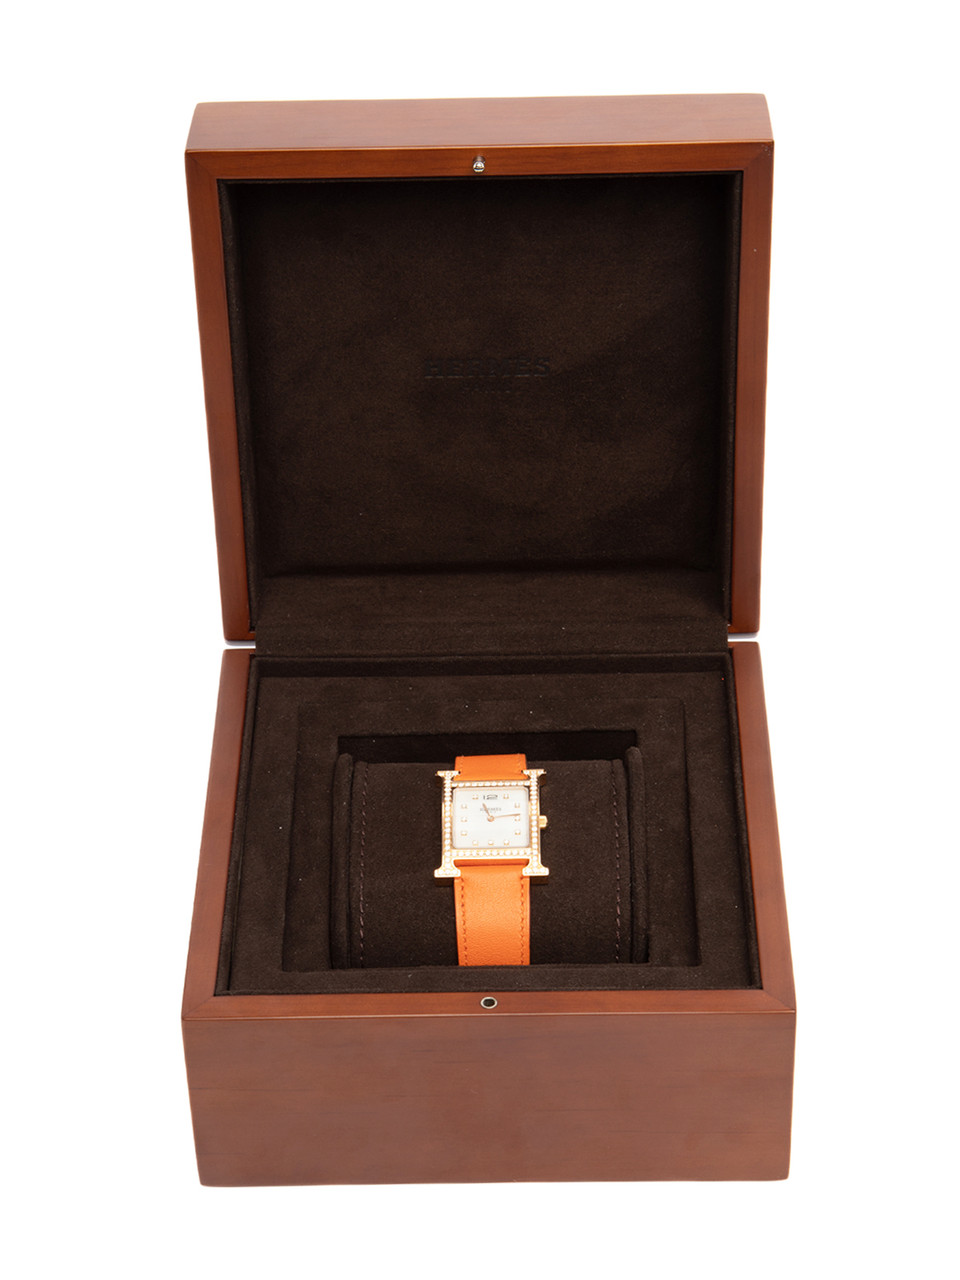 Hermès Heure H Orange Strap Watch